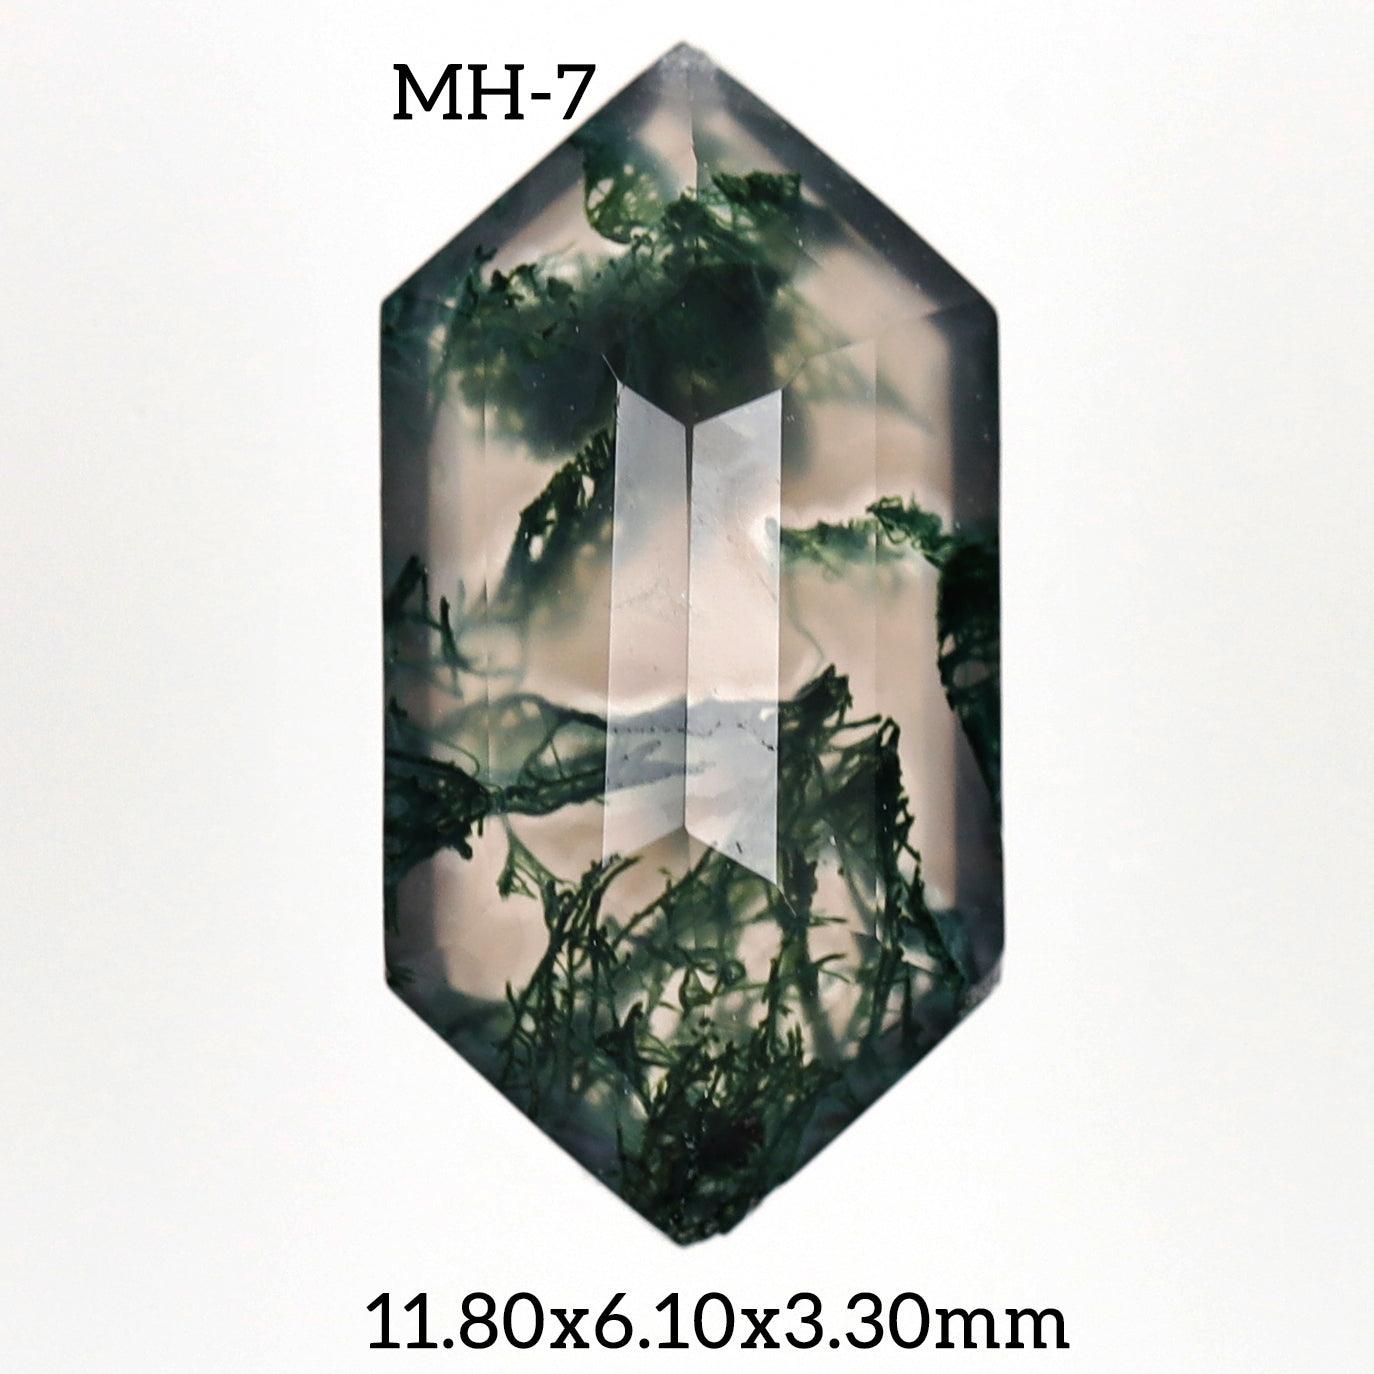 MH - 7 Moss Agate Hexagon Gemstone - Rubysta